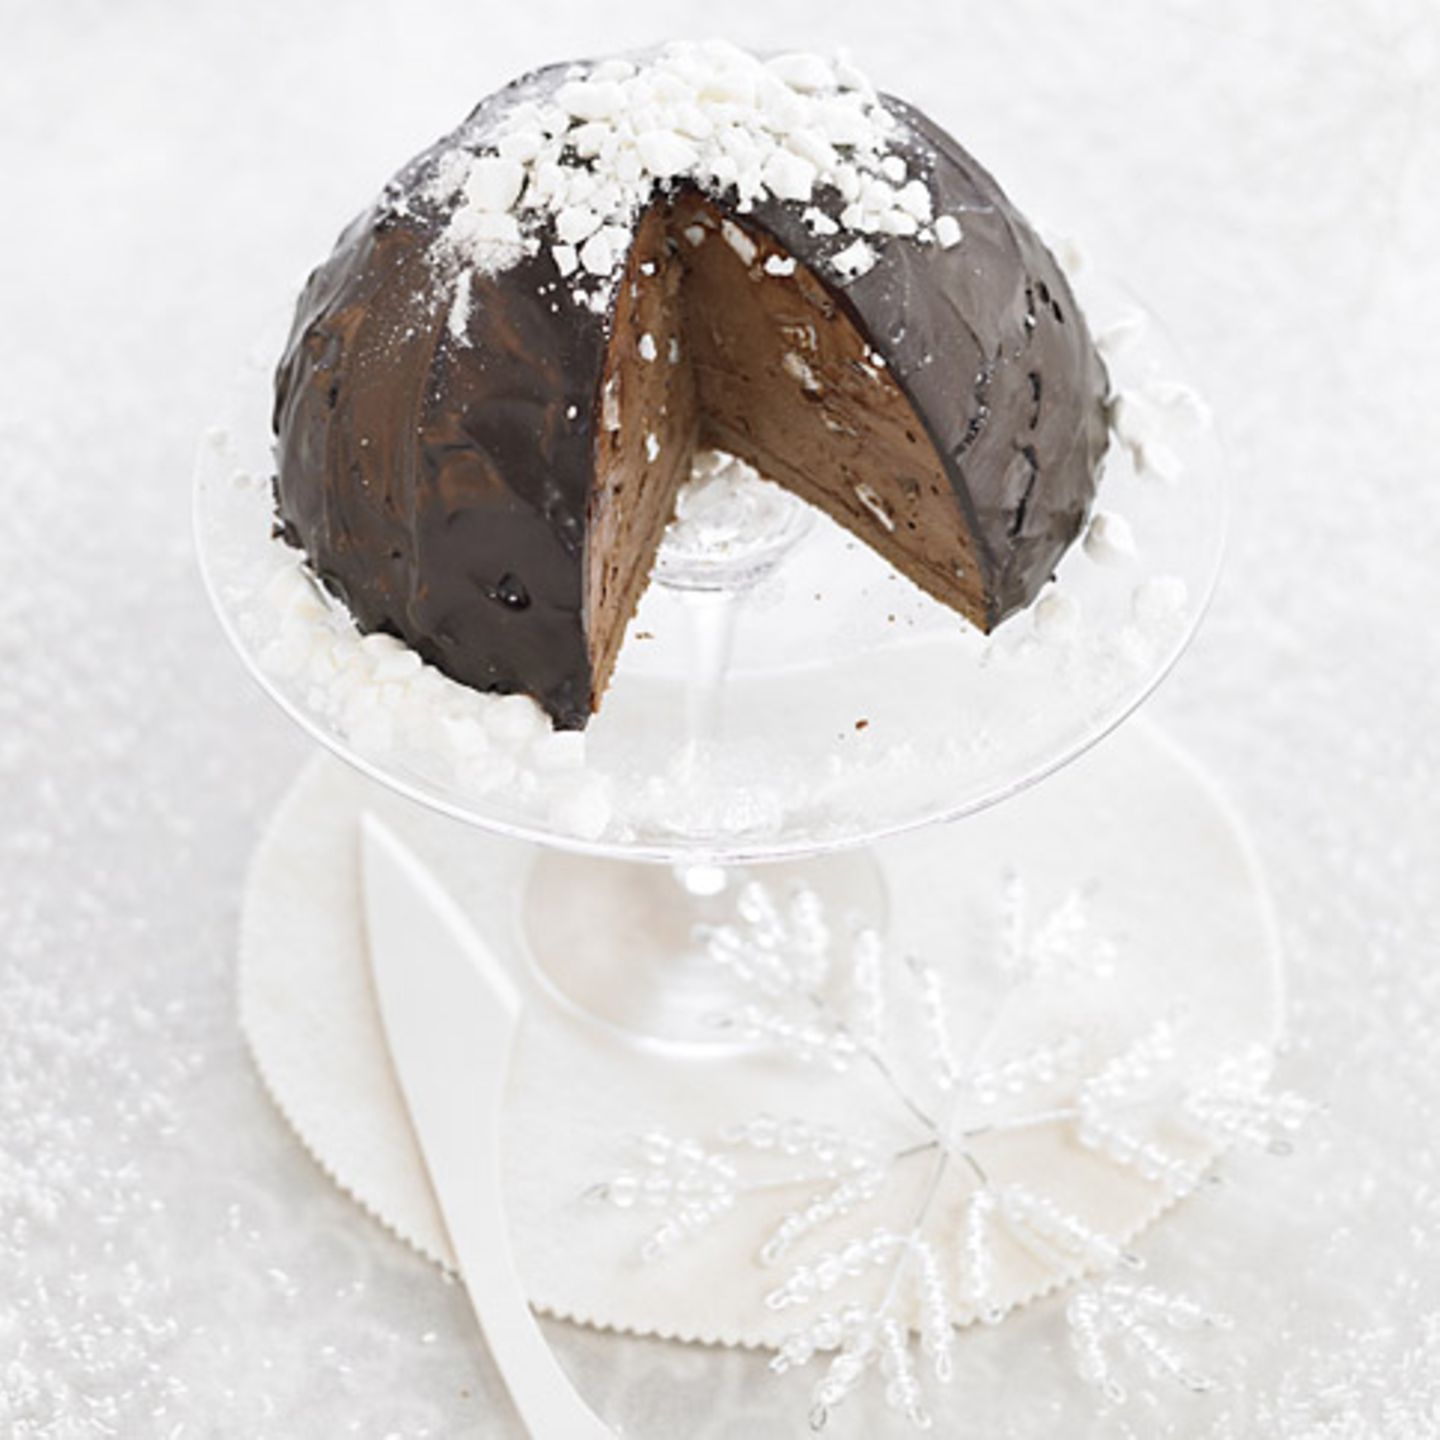 Cupola con mousse al cioccolato (Schoko-Mousse-Torte)